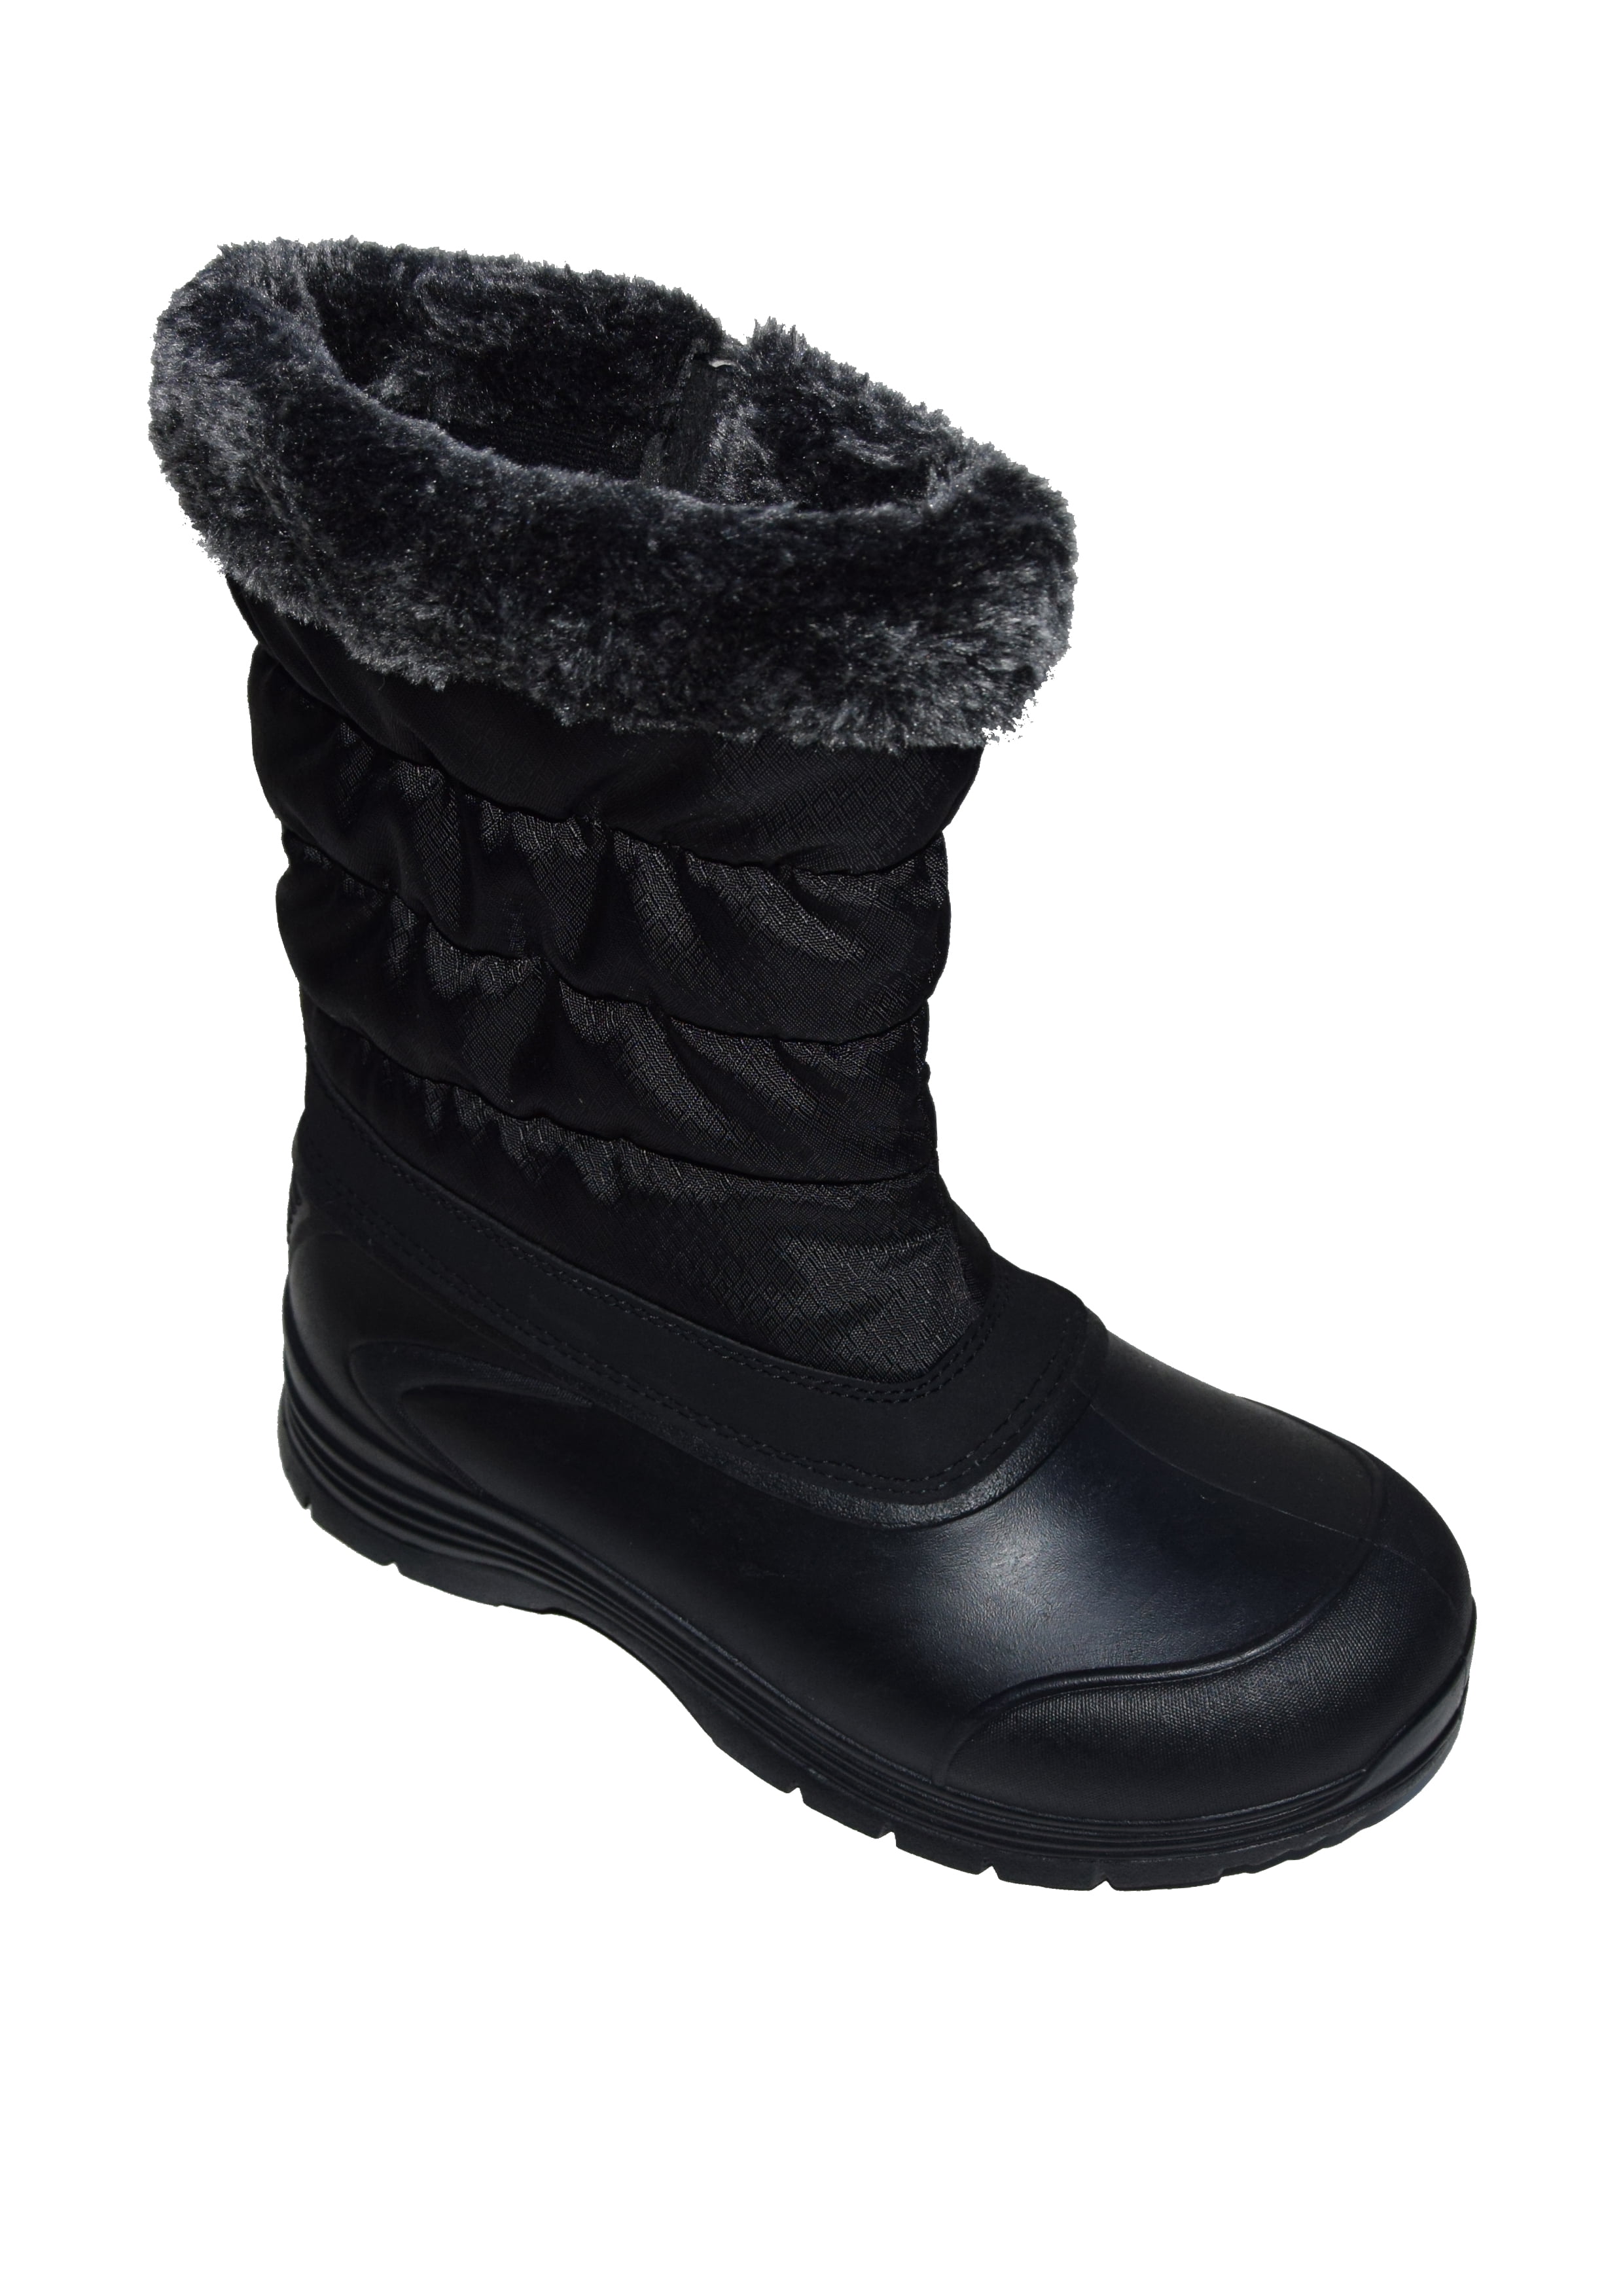 walmart winter snow boots